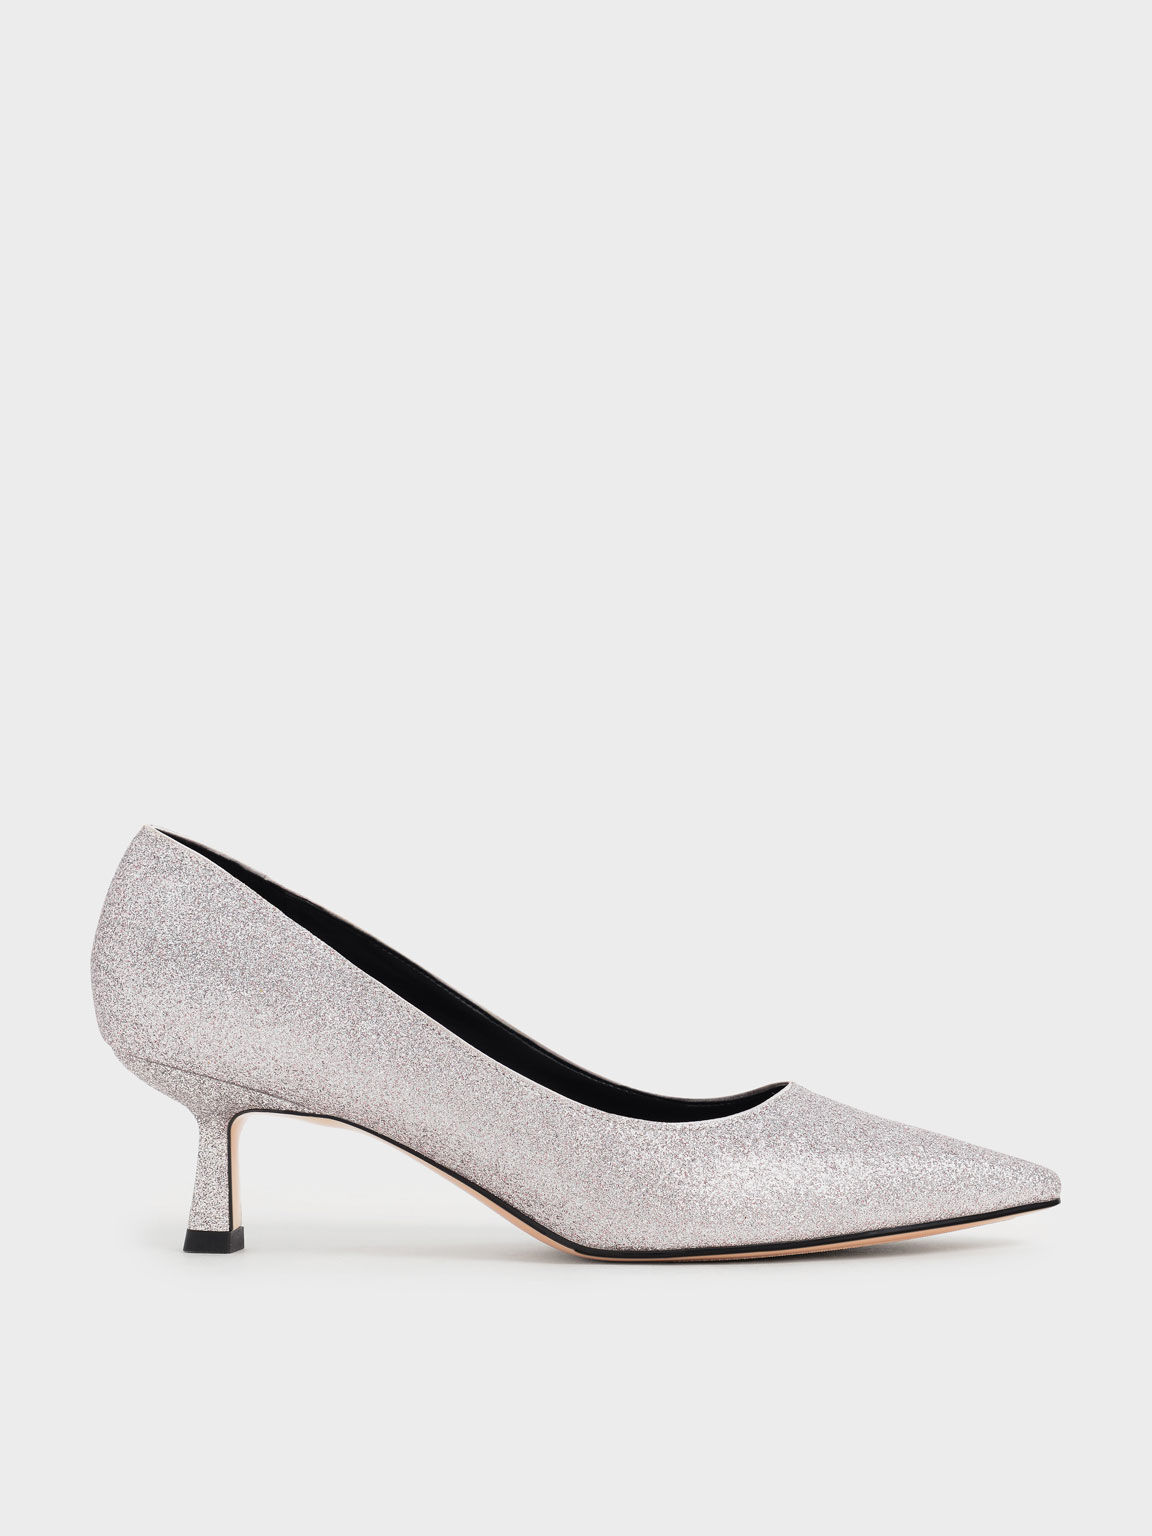 Buy Allegra K Women's Stiletto Kitten Heels Glitter Heel Sandals, Silver,  7.5 at Amazon.in